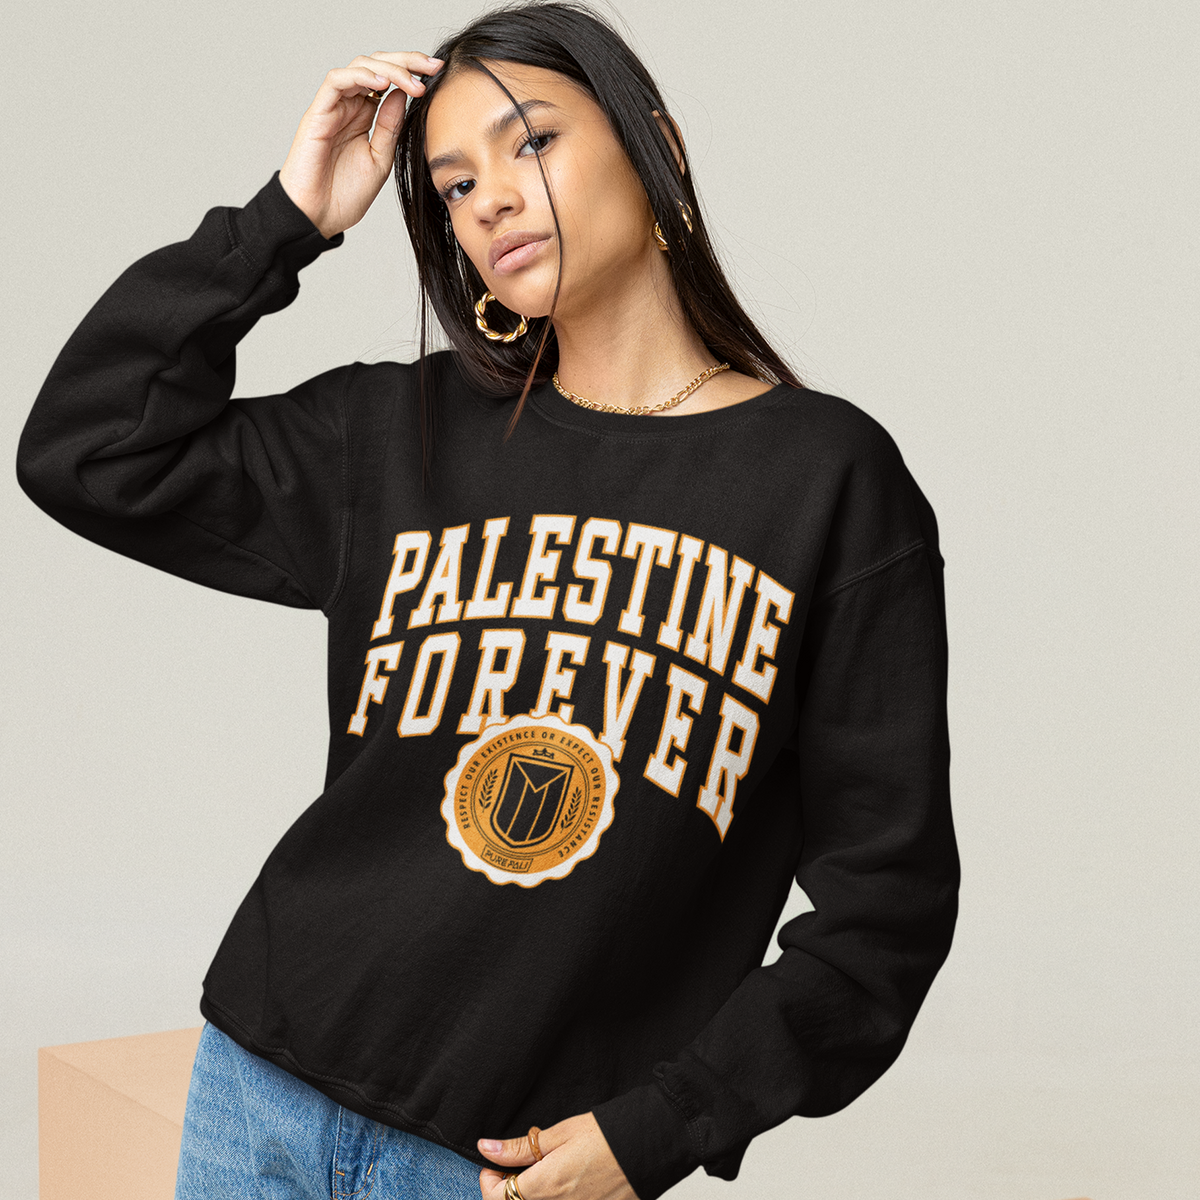 Palestine Forever Crewneck - PurePali